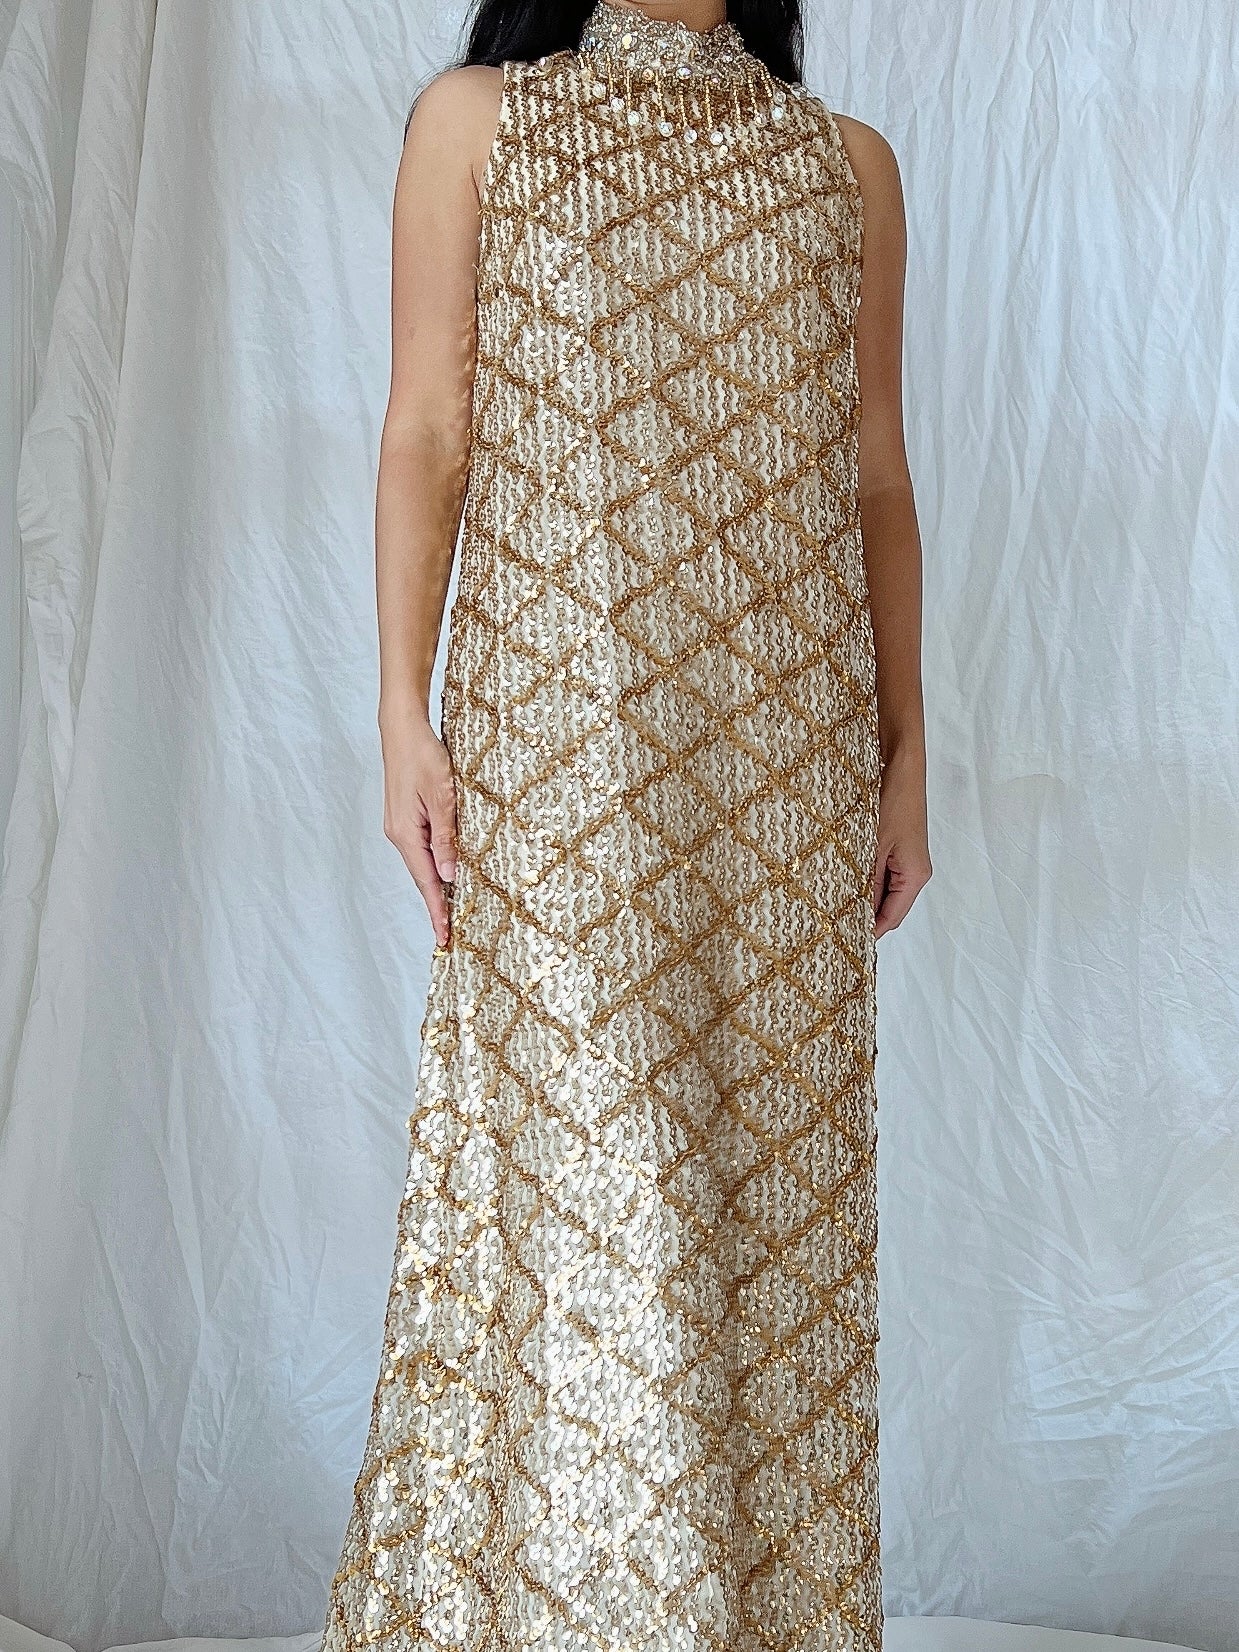 1960s Gold Sequins Dress - M